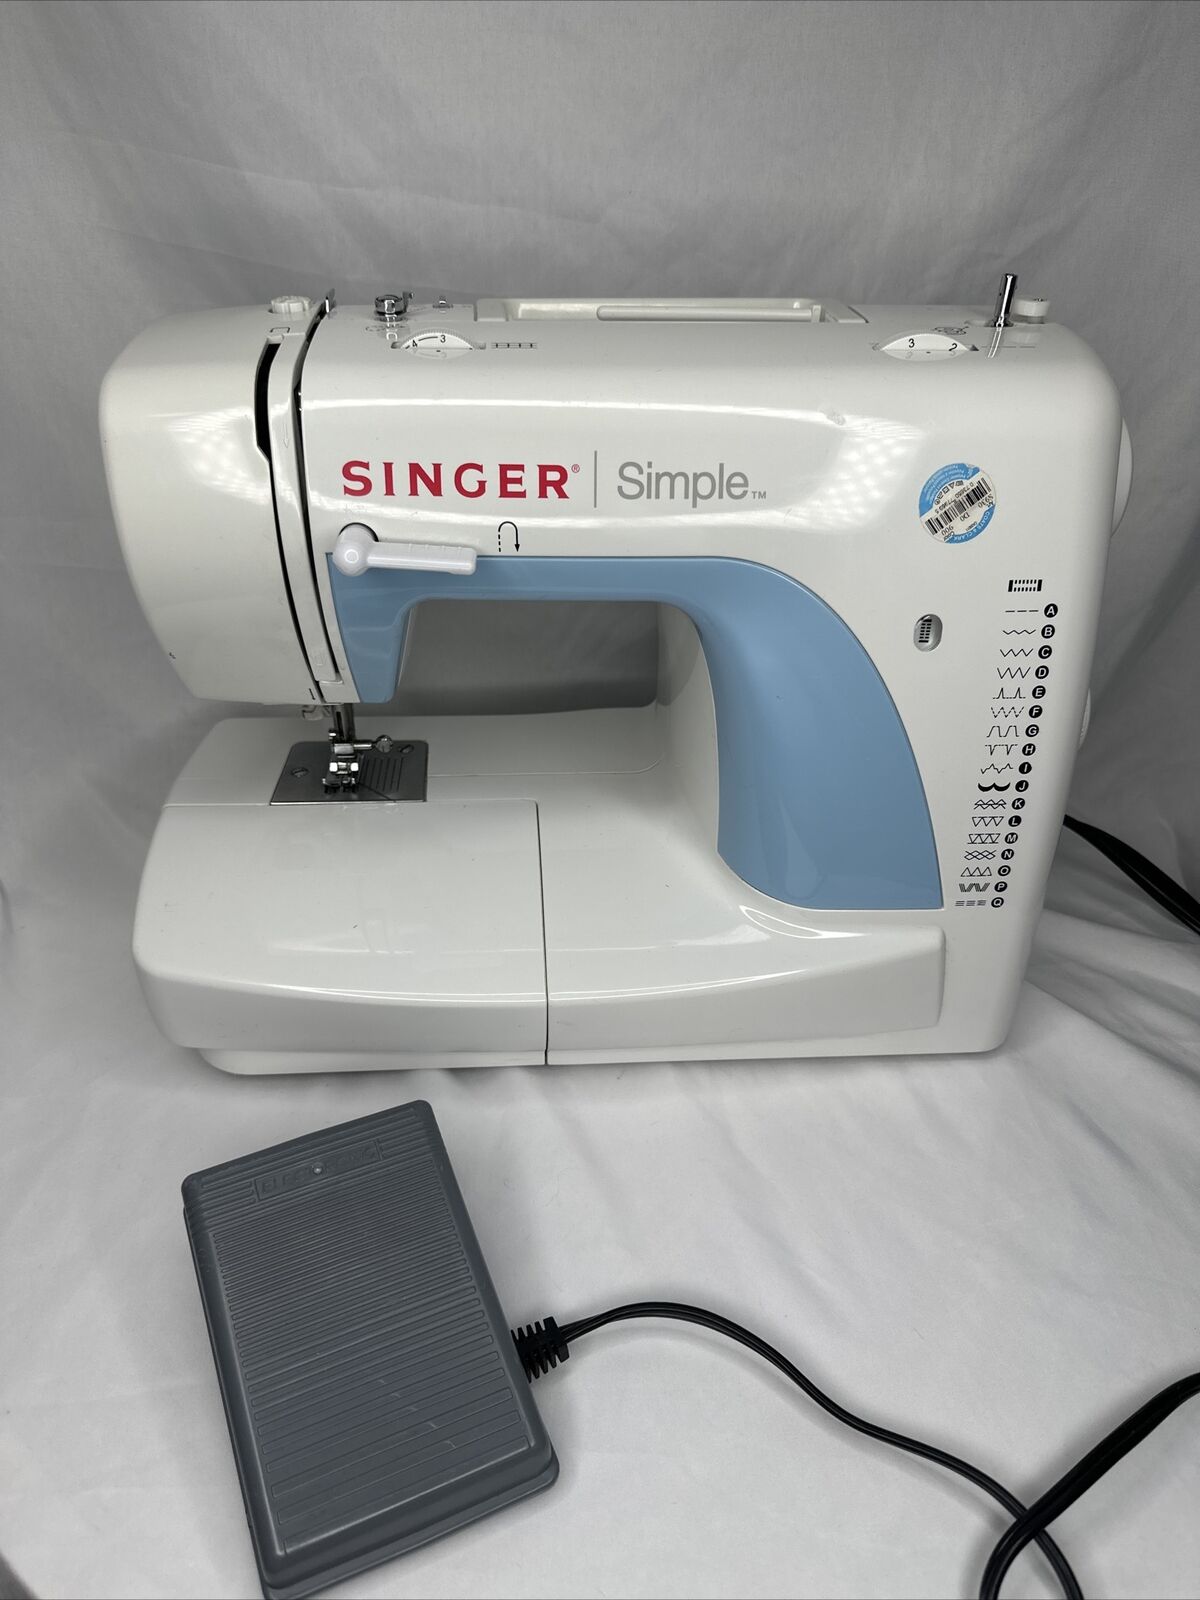 Singer Sewing Machine 3116 Simple Works Amazing See Video